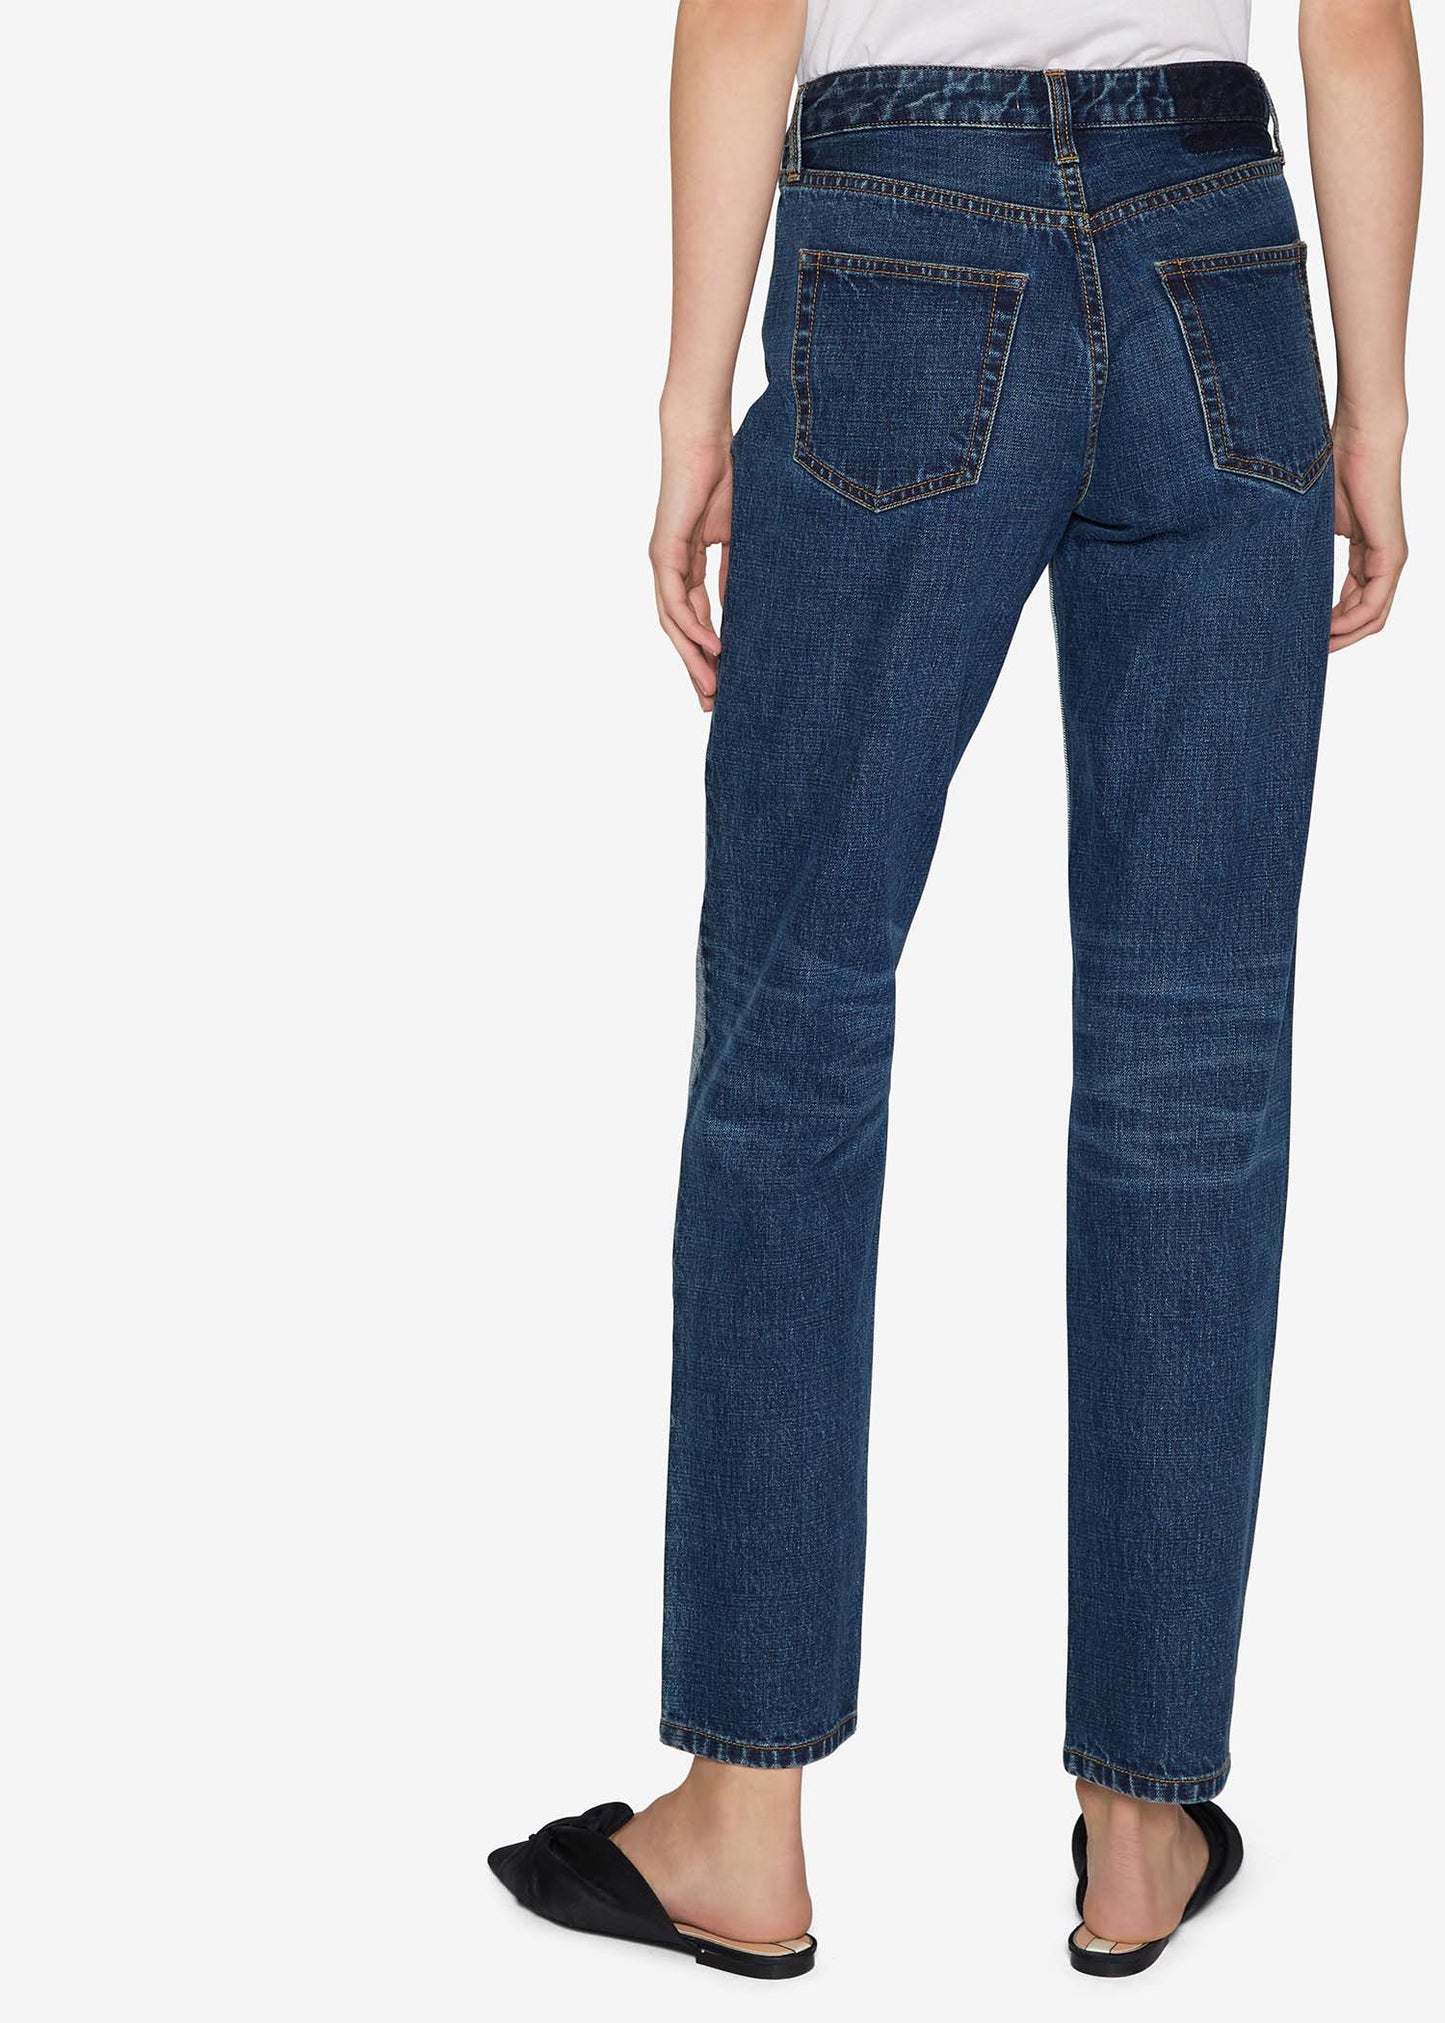 Inside Out Straight-Leg Indigo Jeans